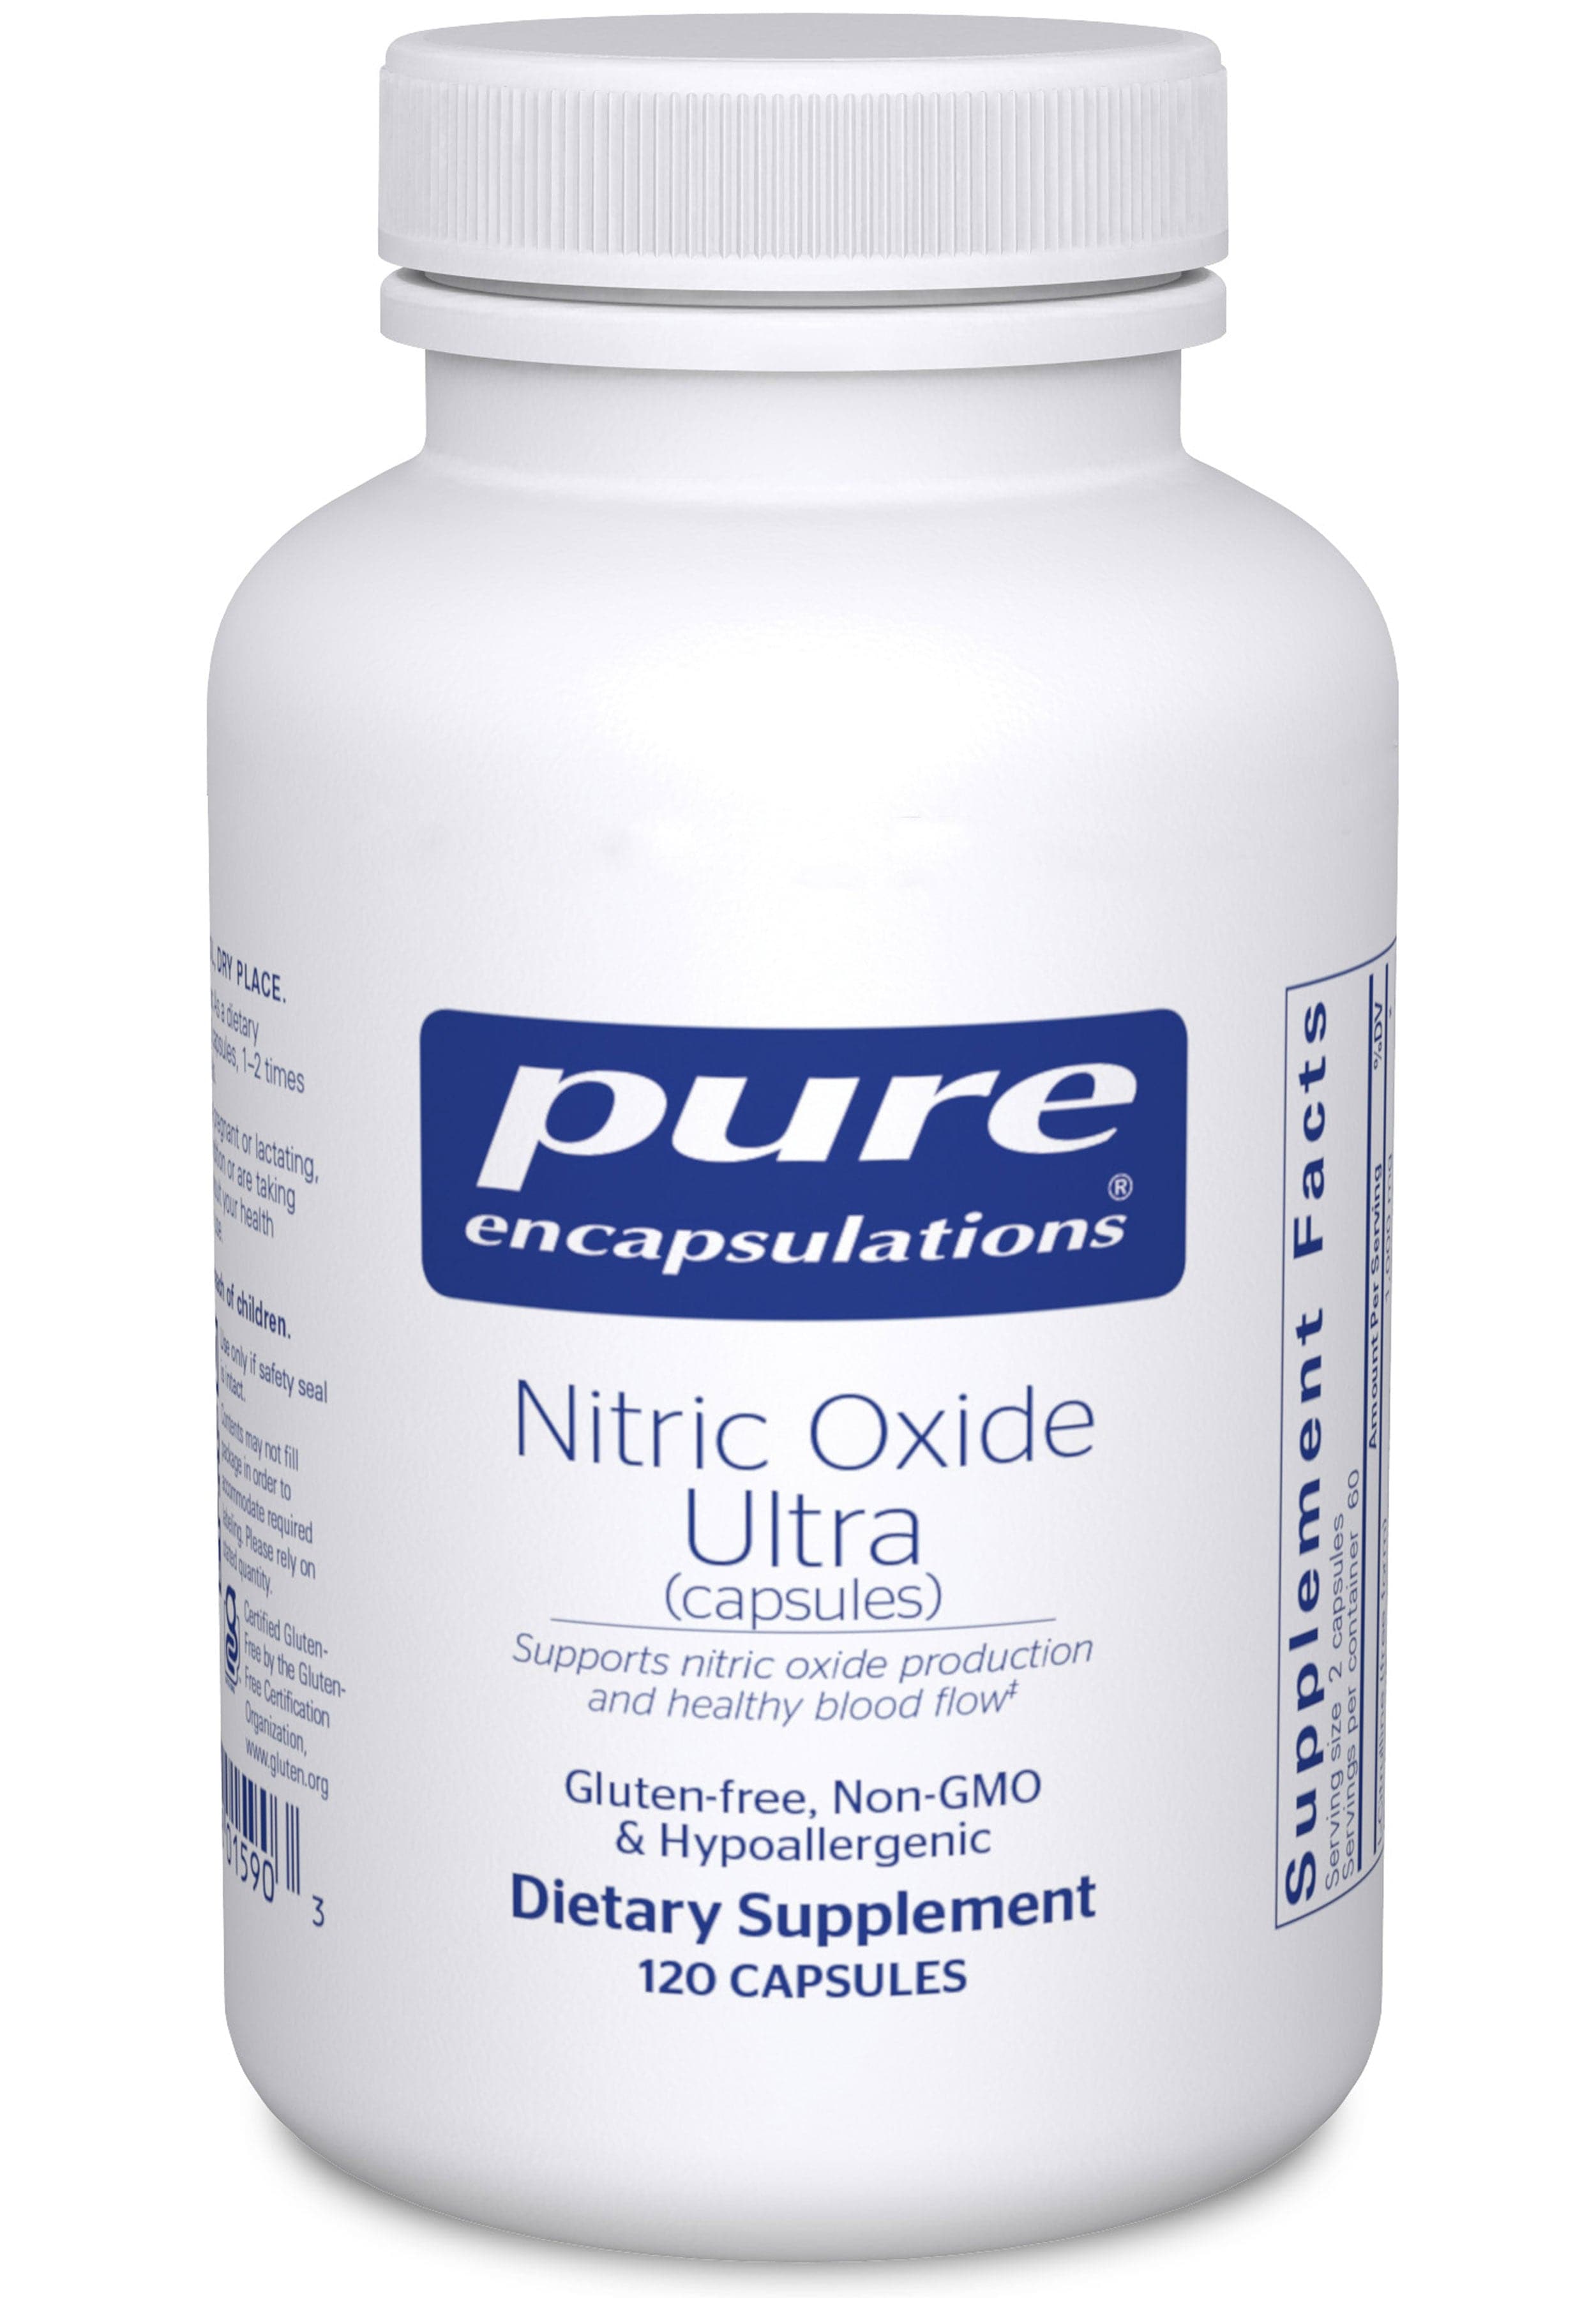 Pure Encapsulations Nitric Oxide Ultra (capsules)